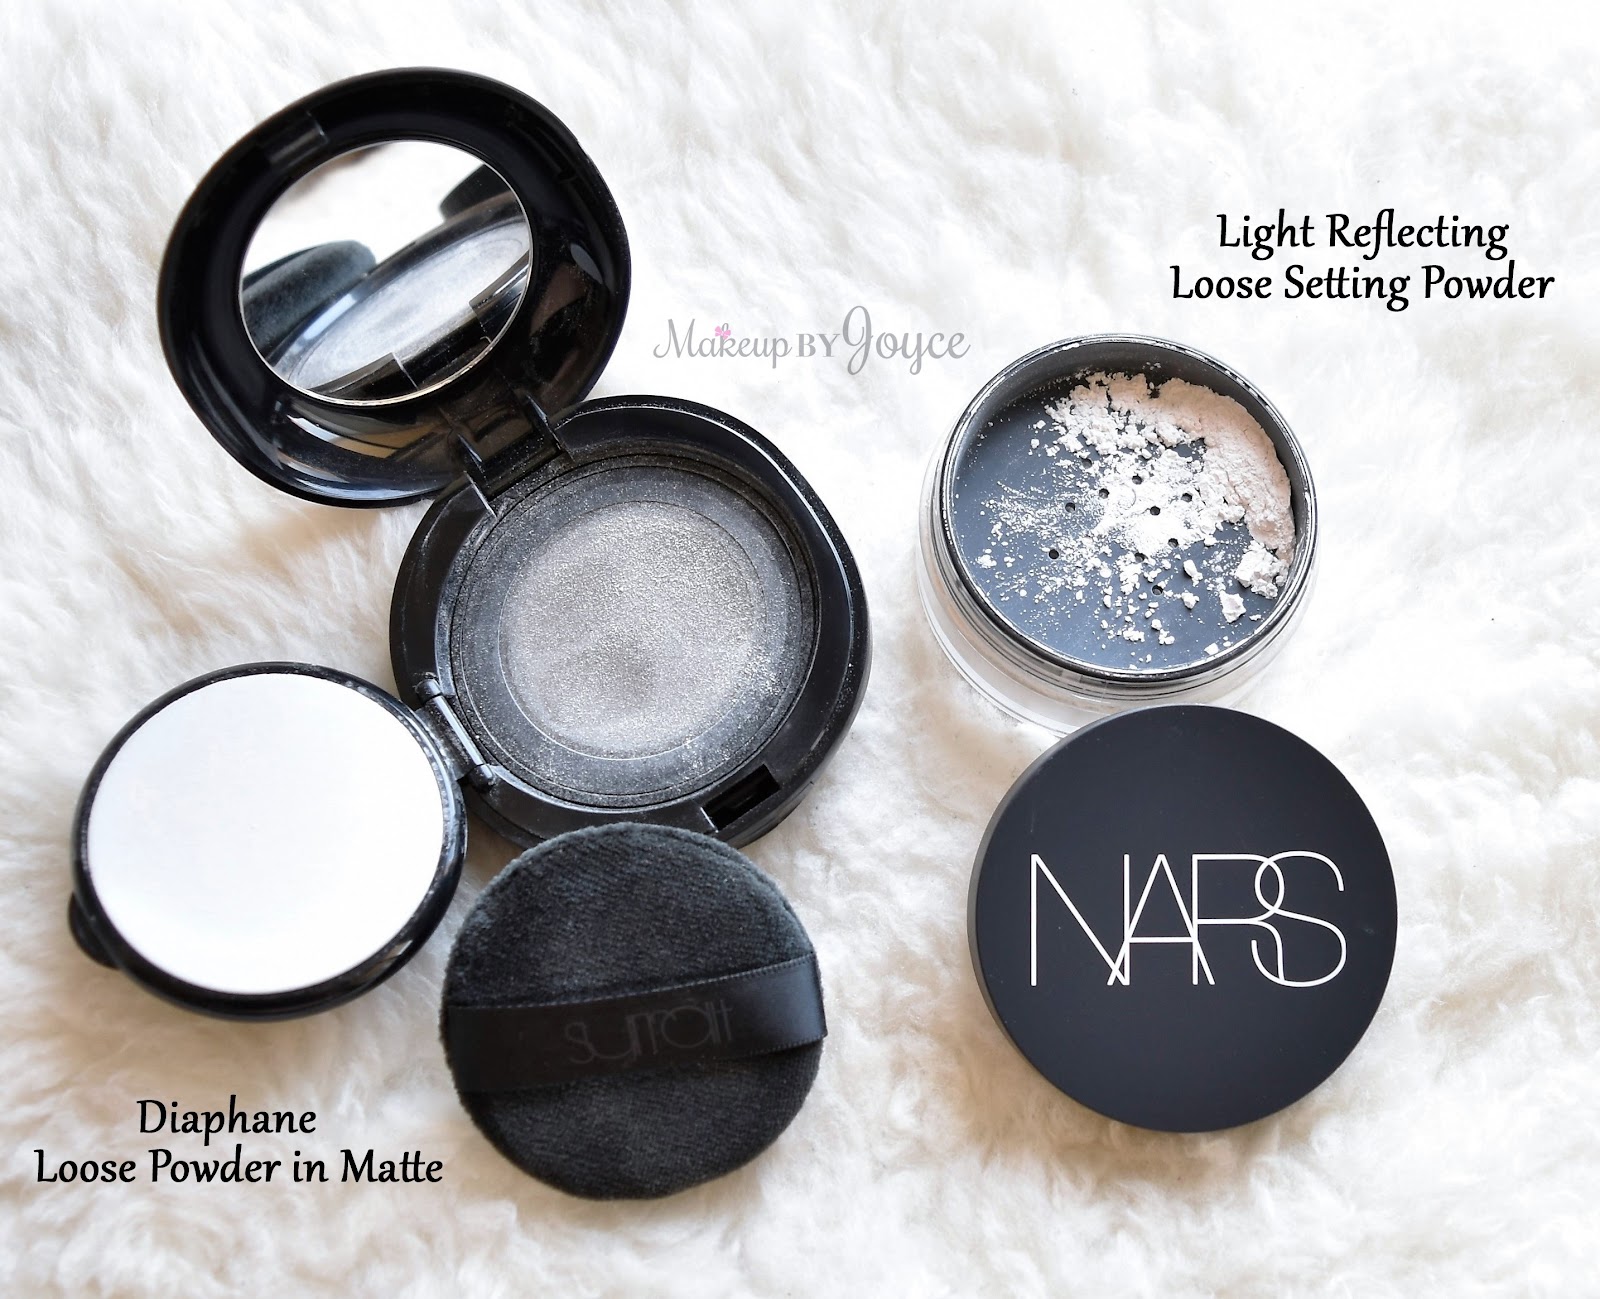 nars light reflecting loose setting powder review